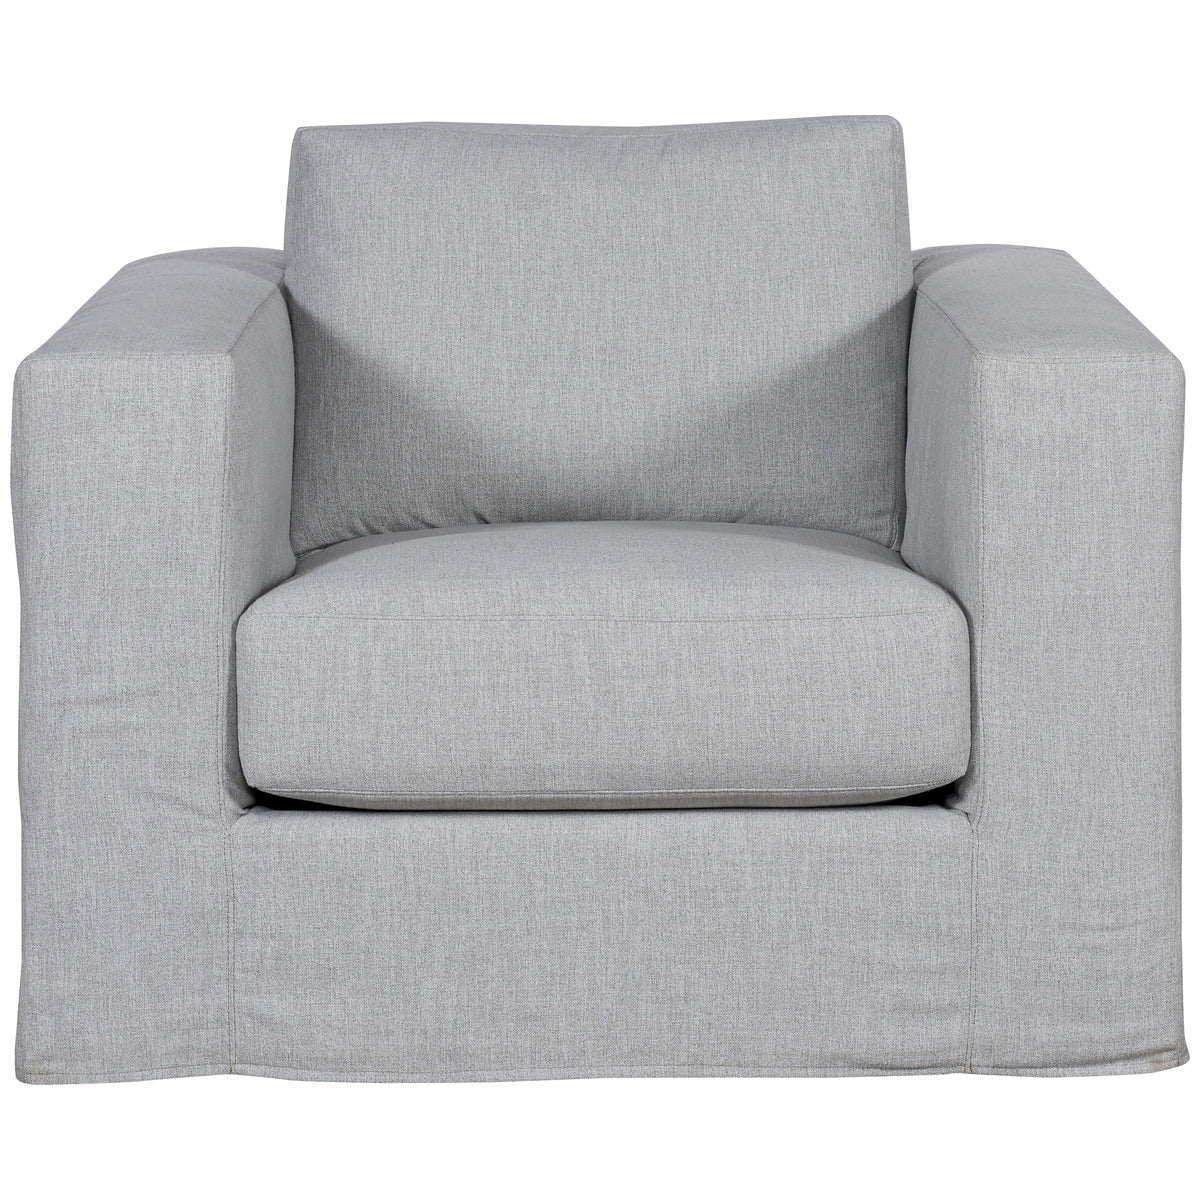 Vanguard Furniture Leone Chair